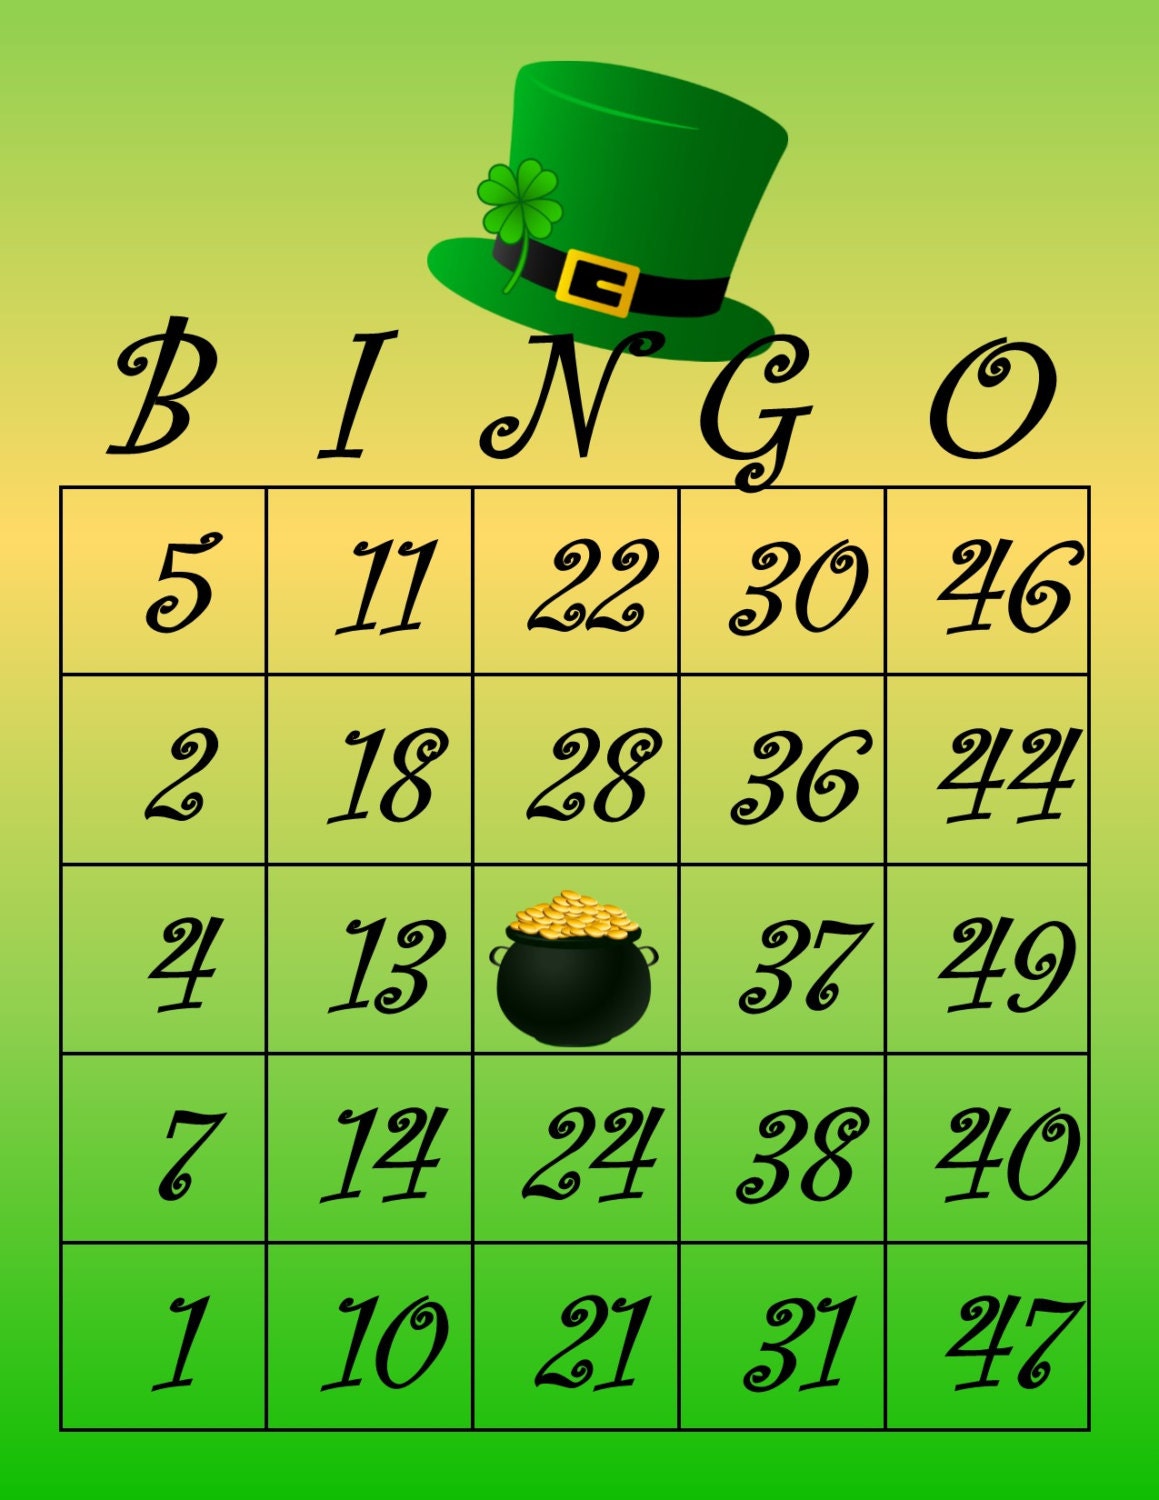 St. Patrick's Day bingo cards set of 30